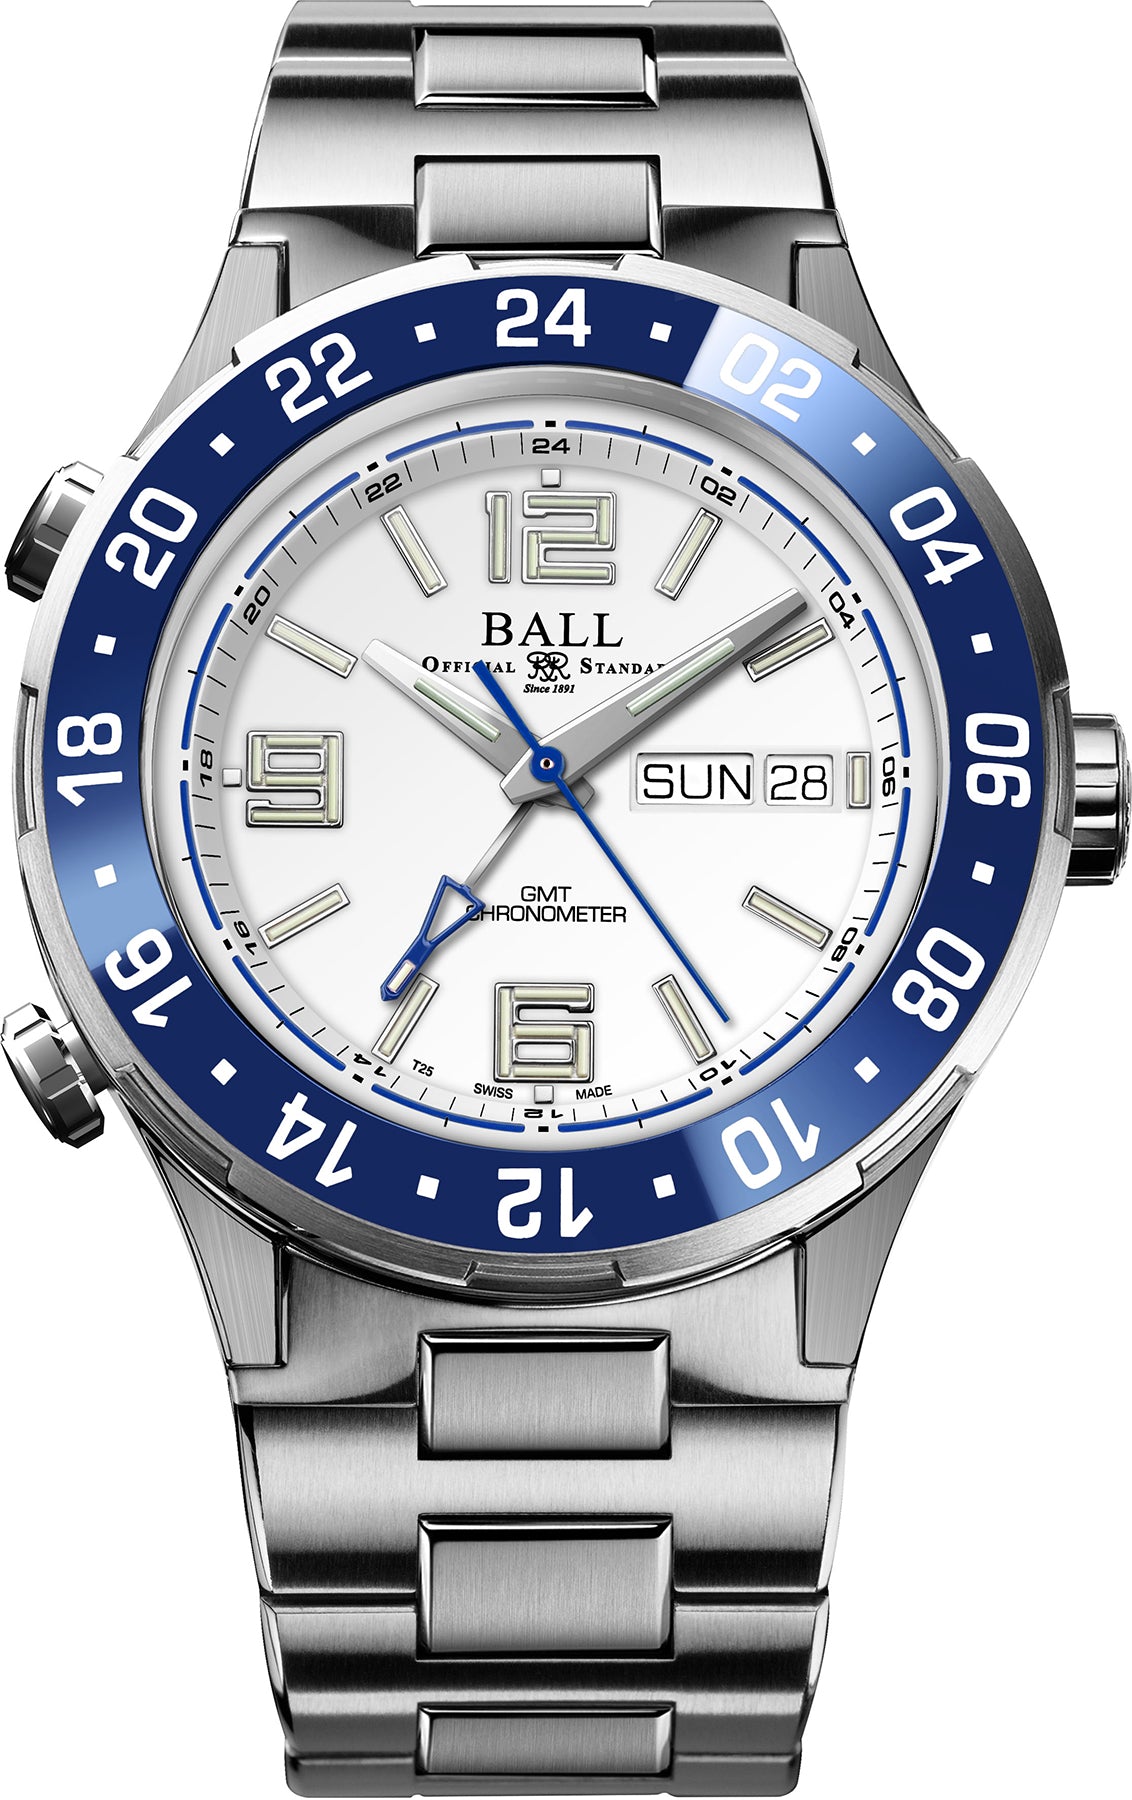 Photos - Wrist Watch Ball Watch Company Roadmaster Marine GMT Limited Edition - White BL-2348 